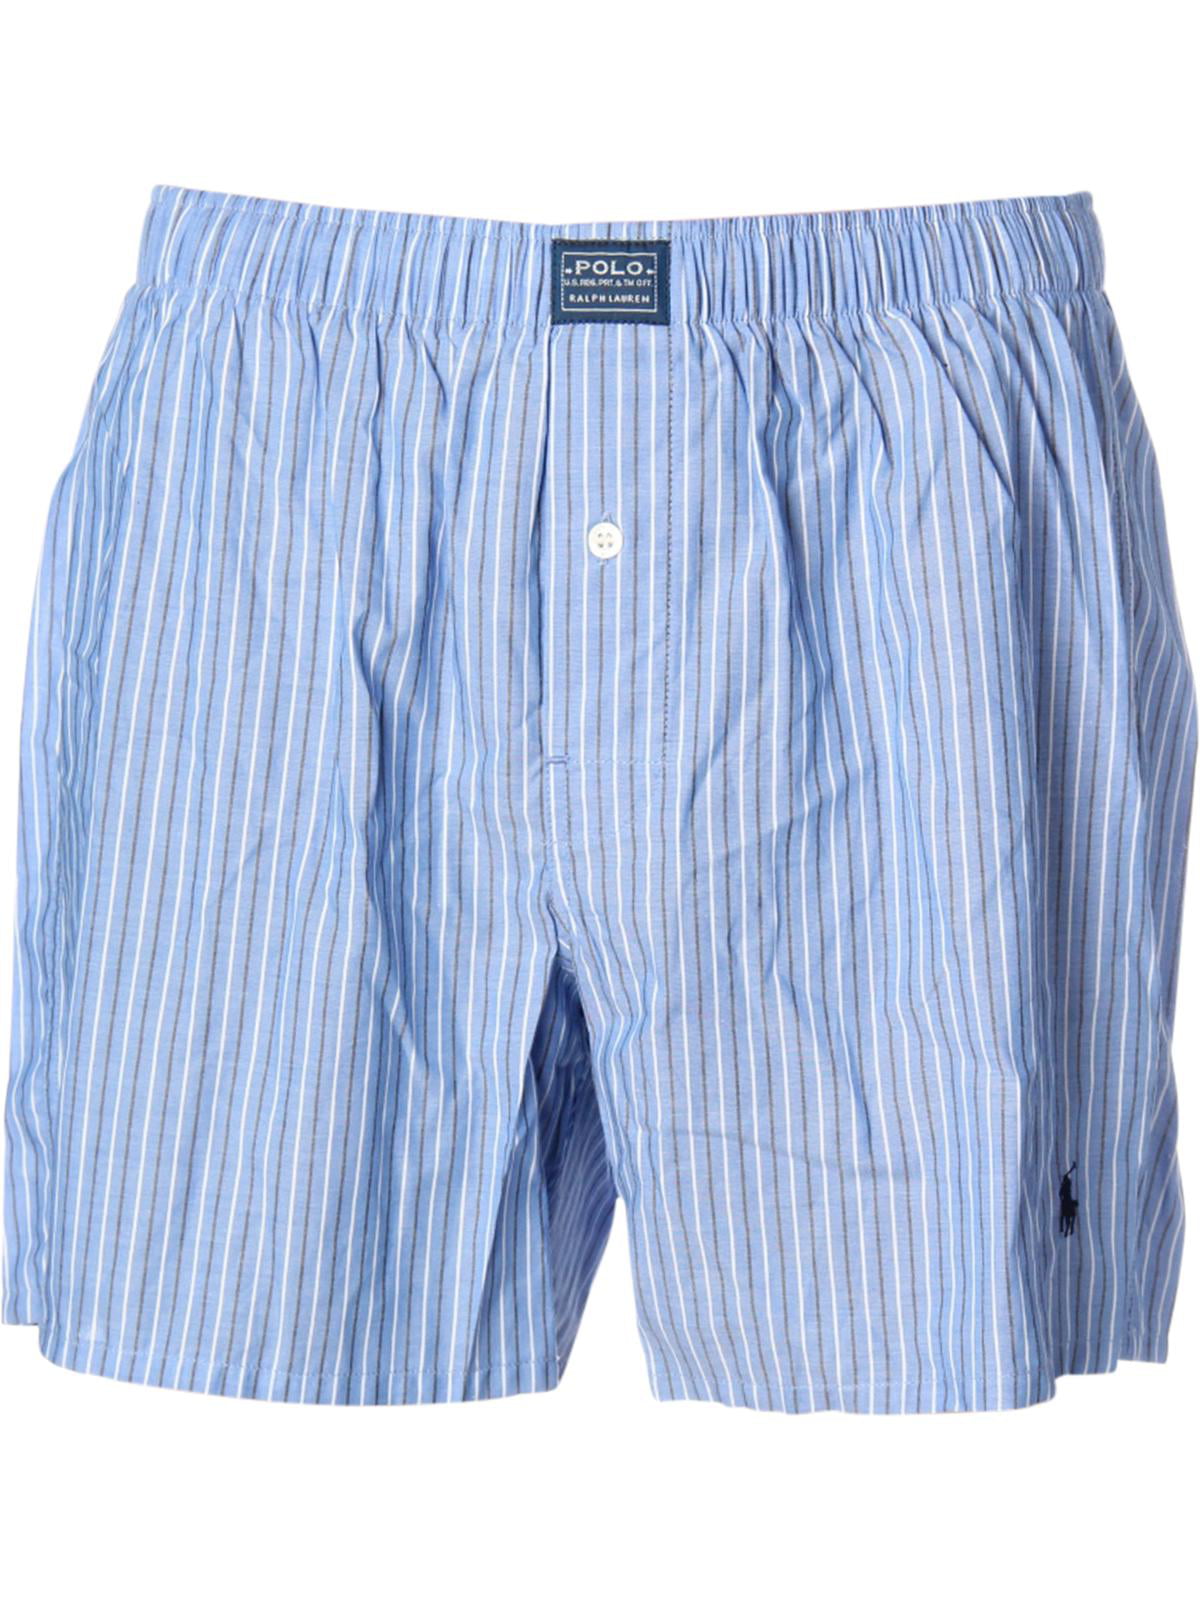 Polo Ralph Lauren Mens Woven Striped Boxers - Walmart.com